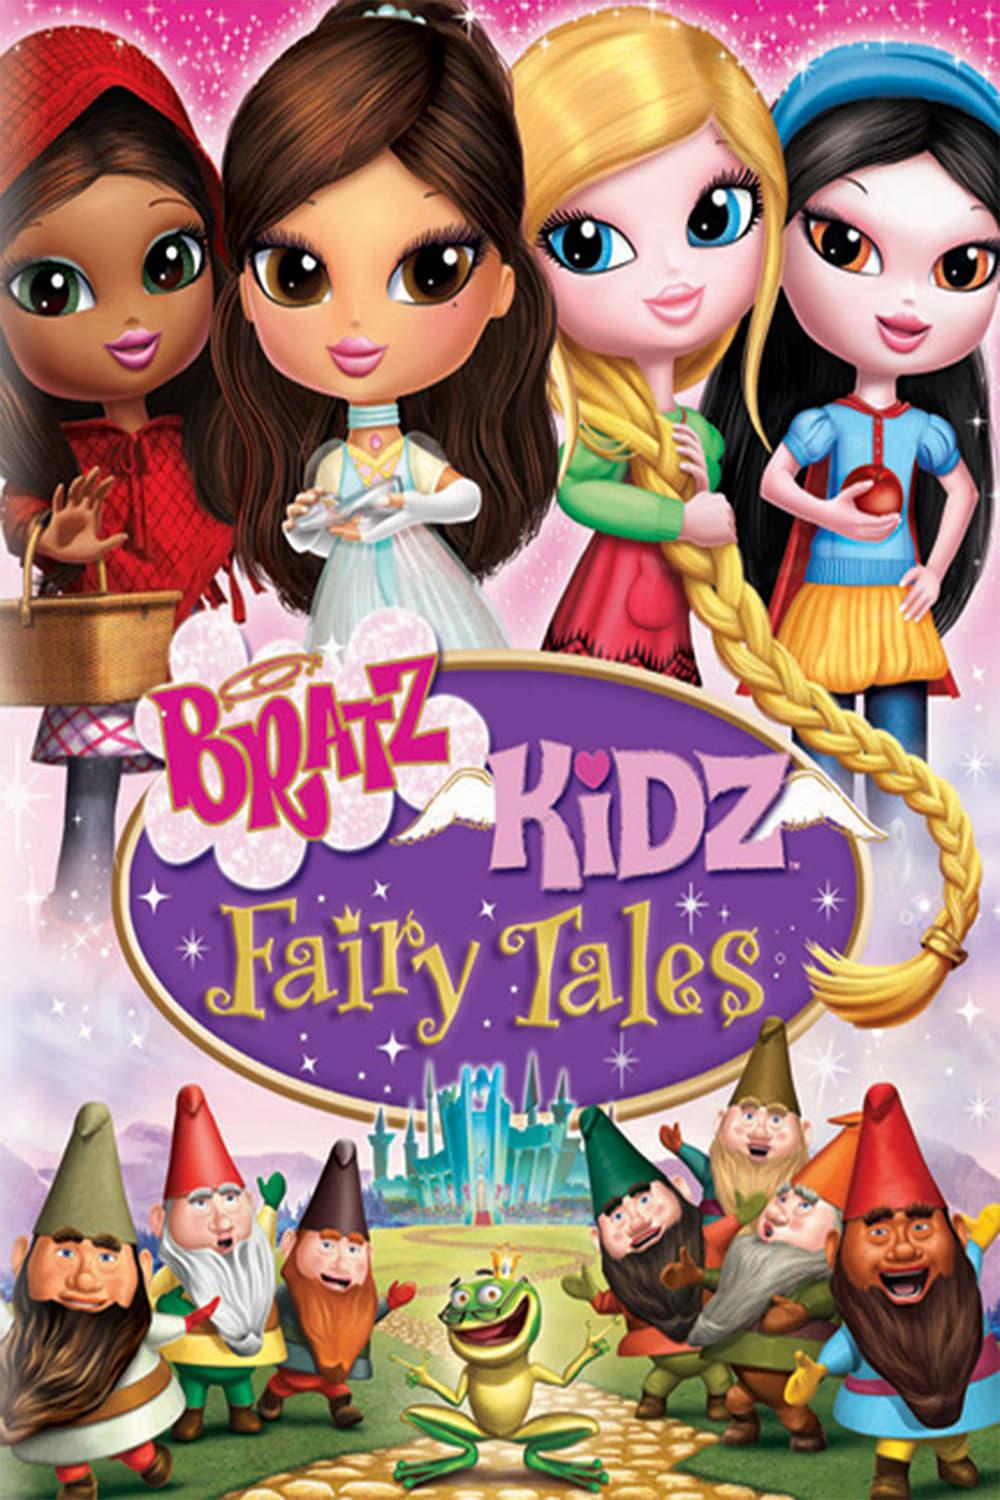 Bratz Kidz: Fairy Tales poster